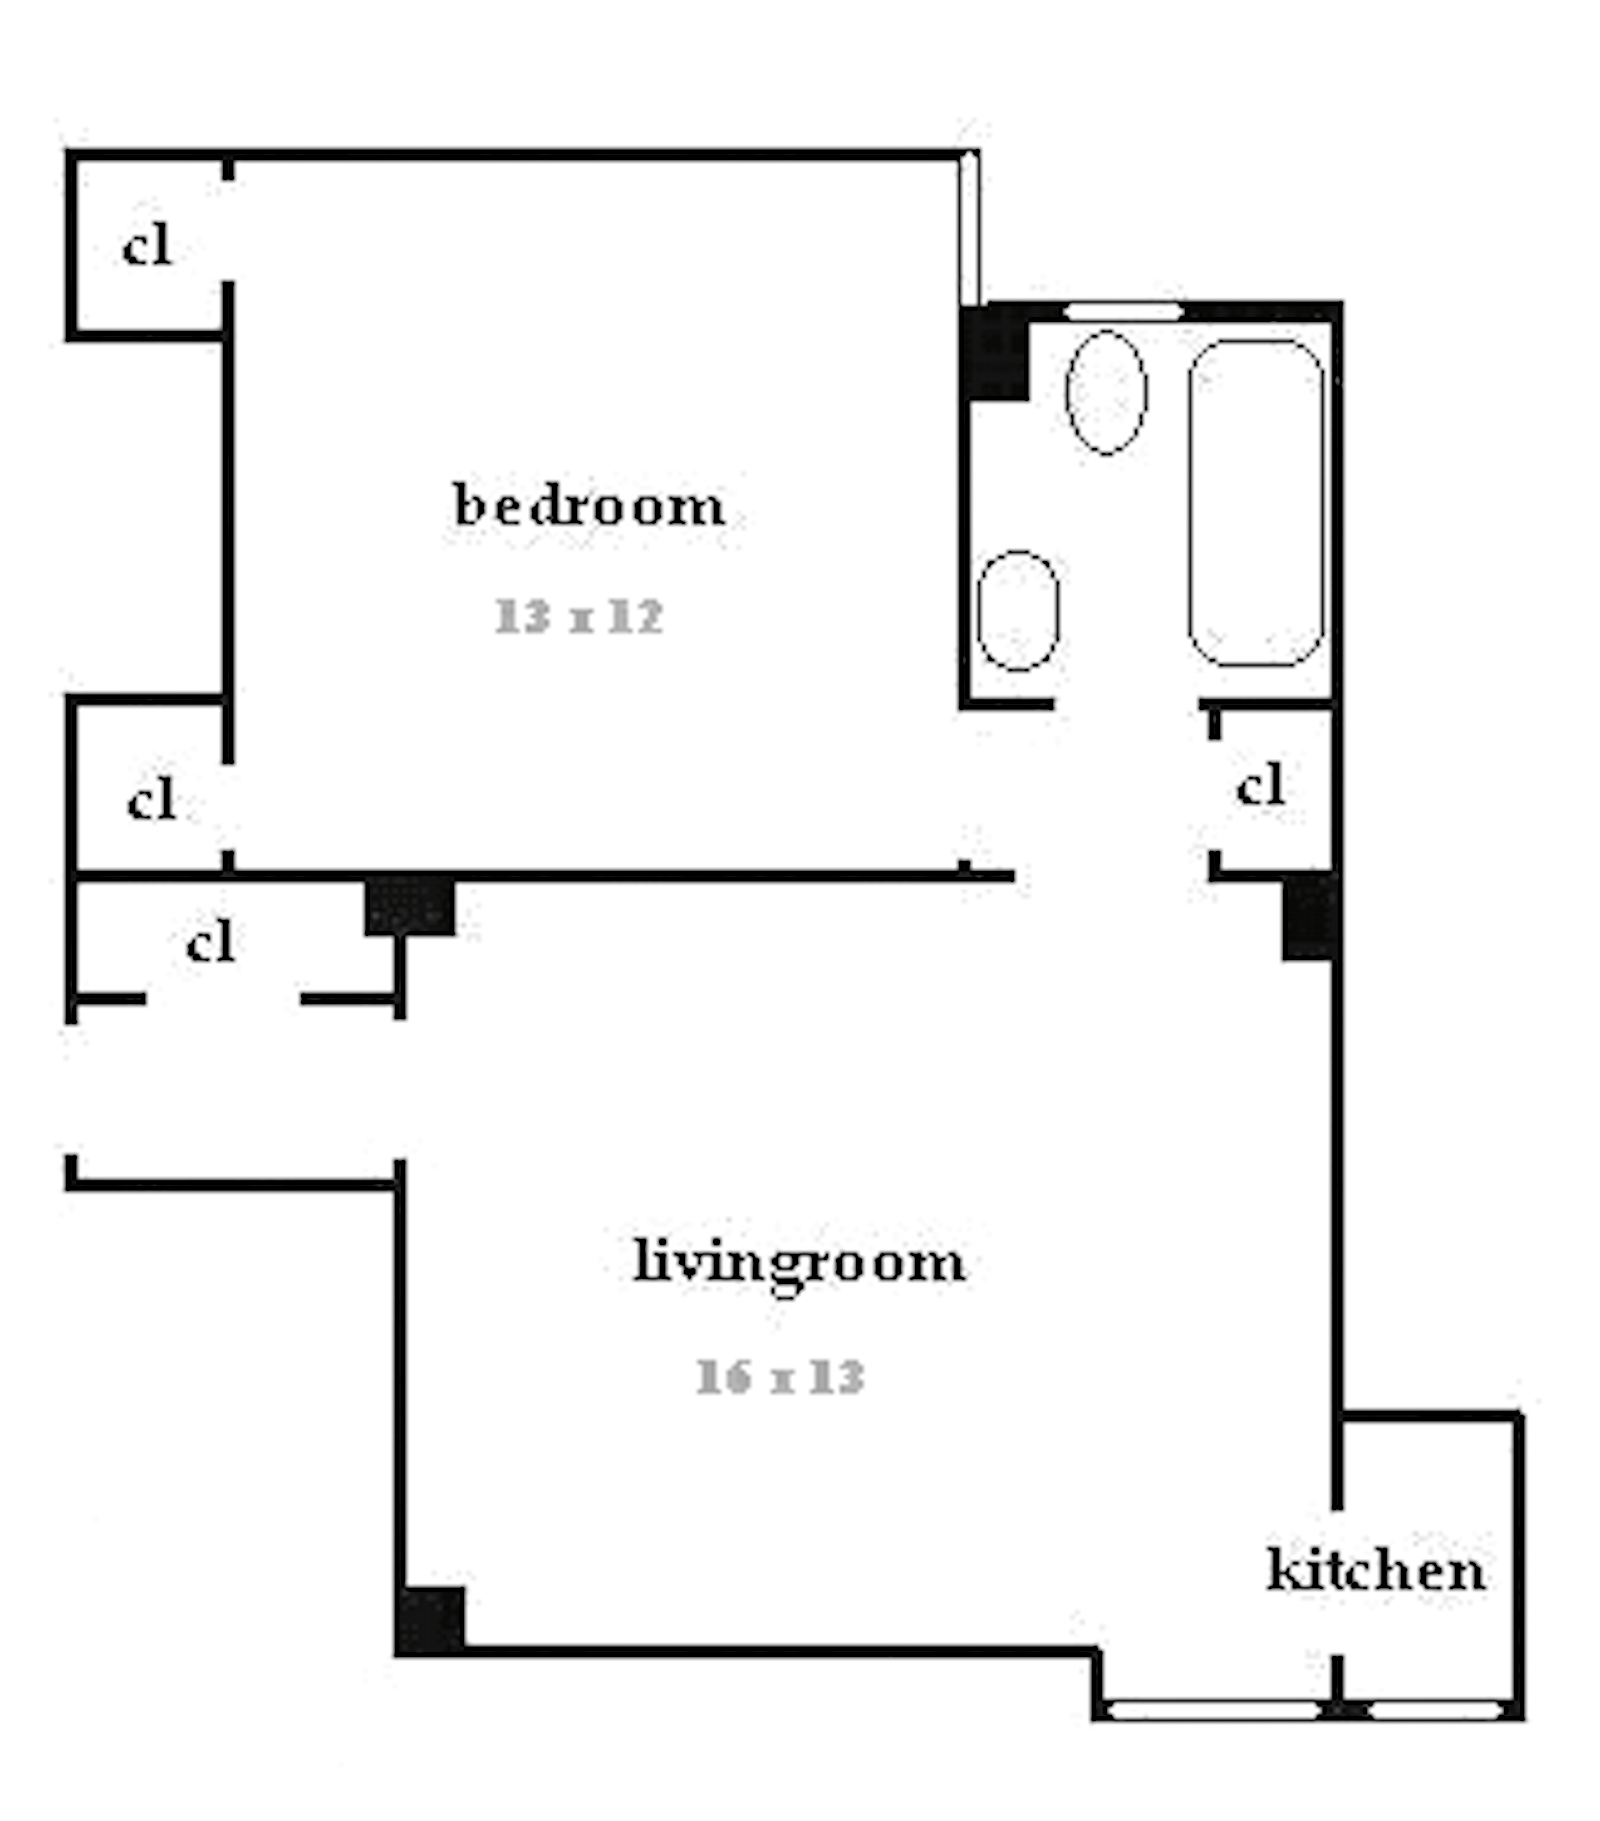 Floorplan for 333 East 43rd Street, 515